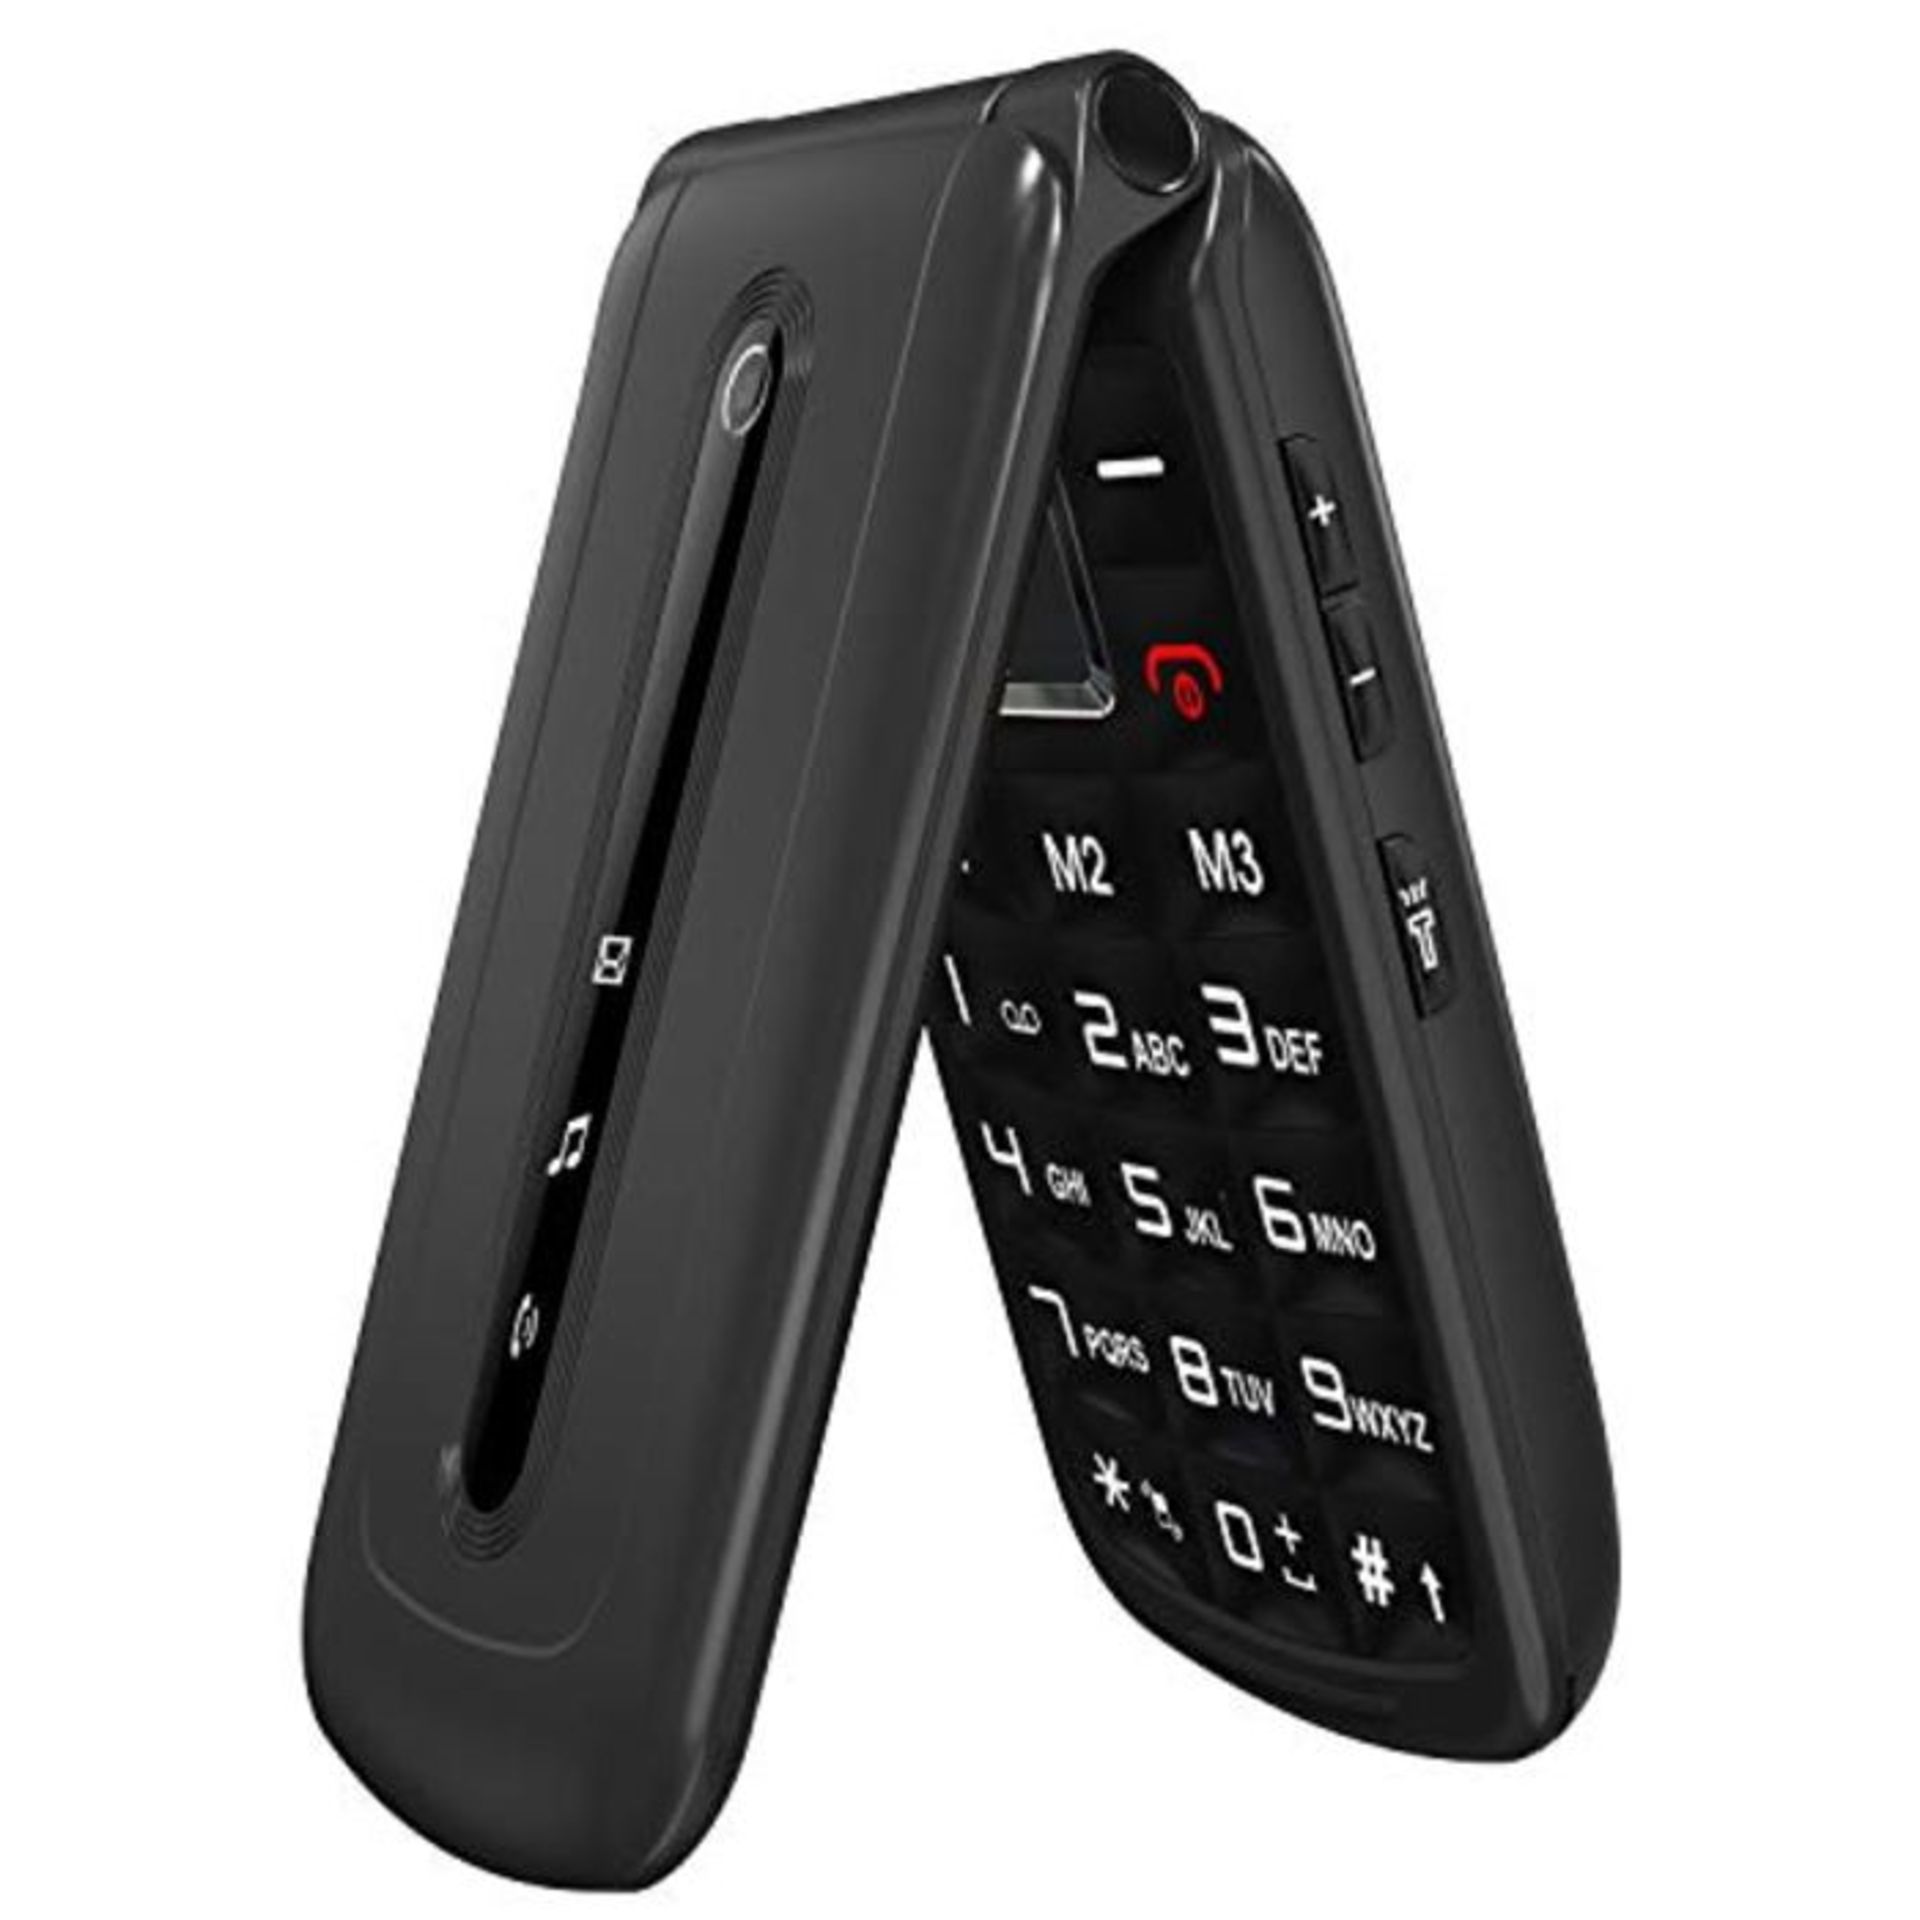 Ukuu 3G Big Button Basic Mobile Phones Unlocked, Dual Sim Free Flip Mobile Phone with